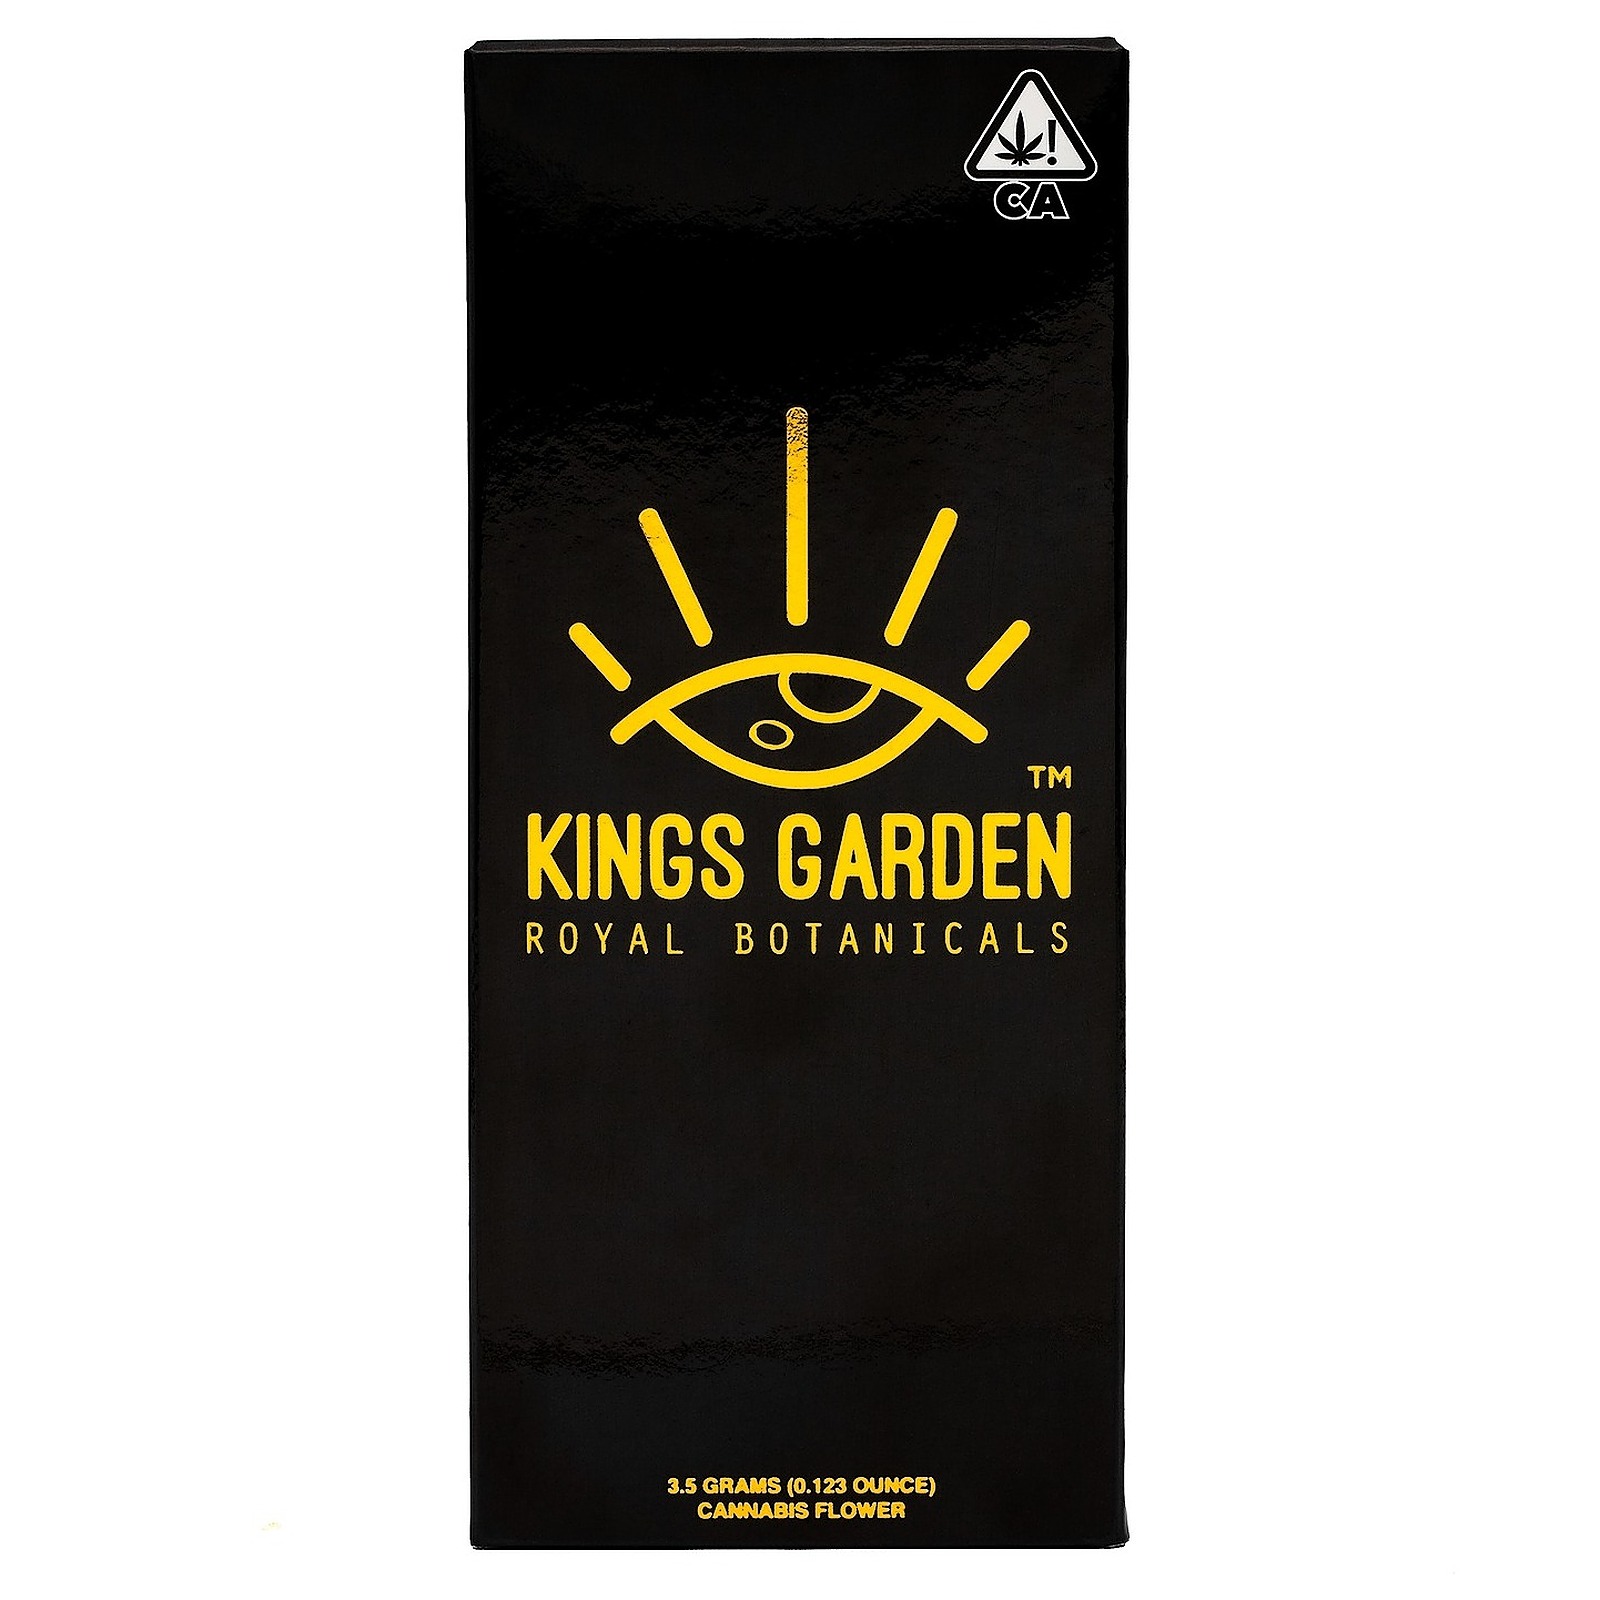 Kings Garden: The Higher Standard | Leafly